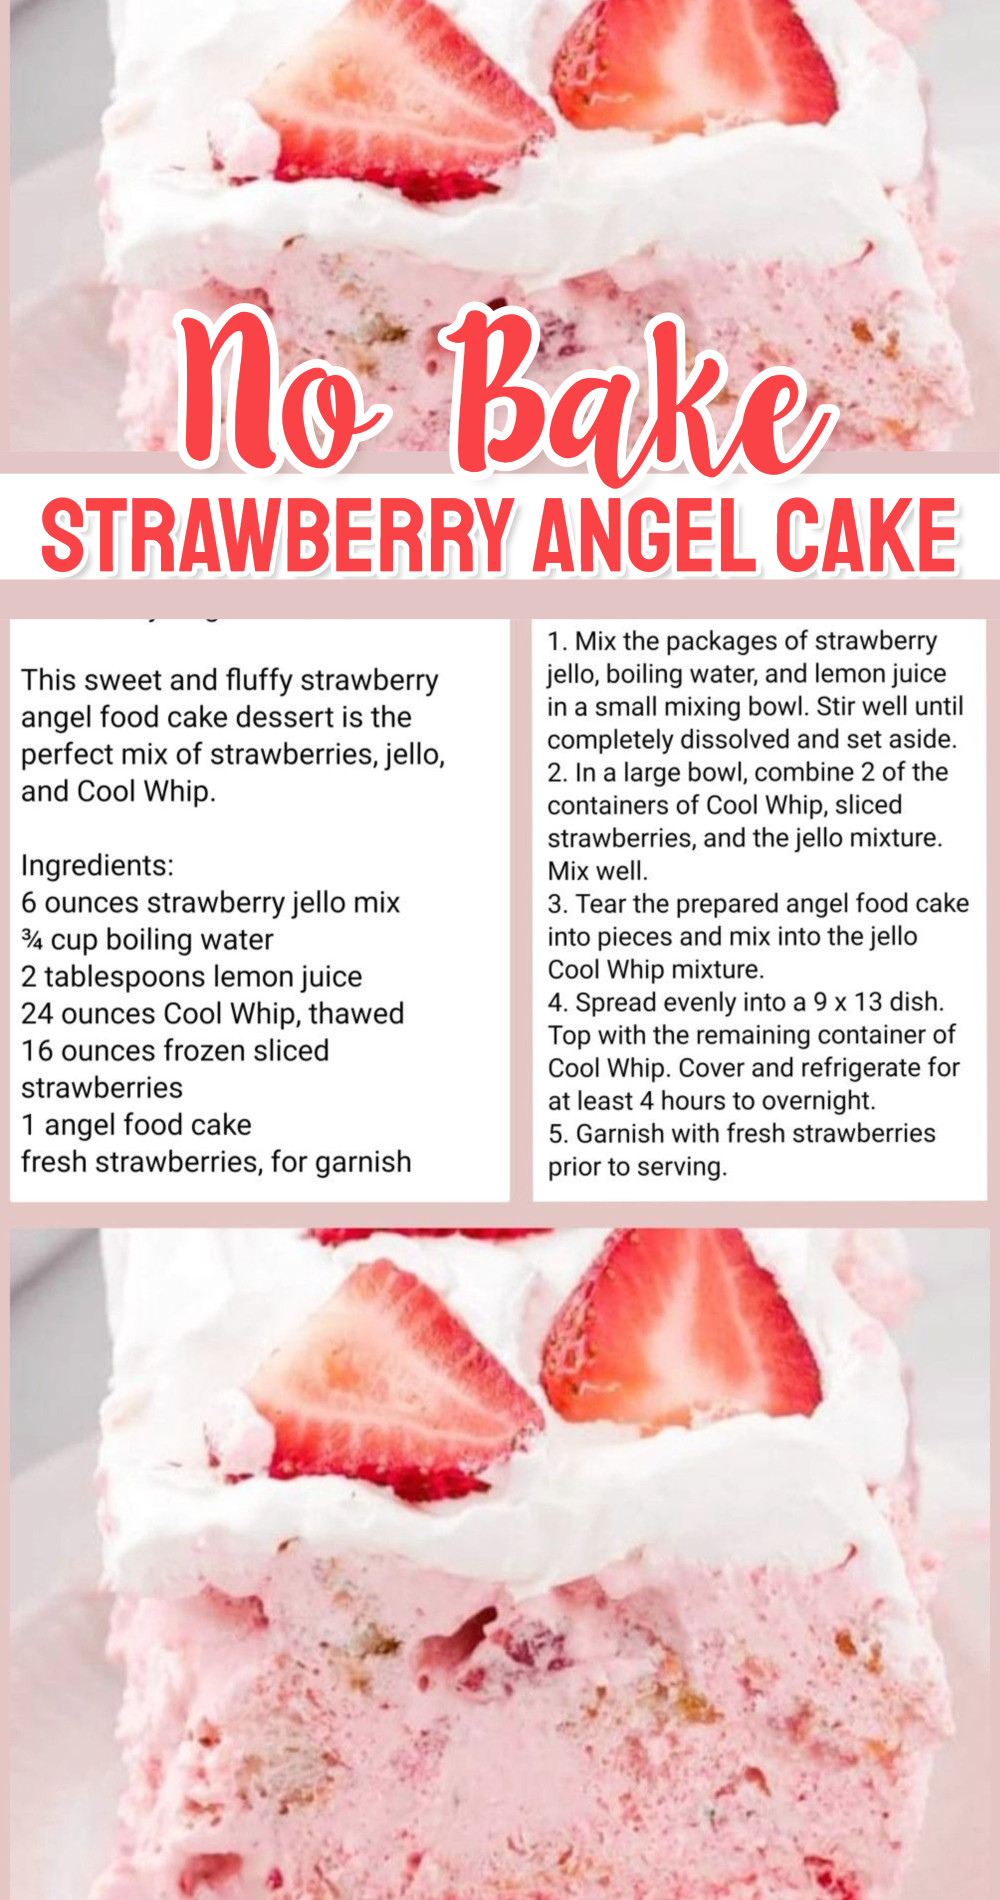 No Bake Strawberry Angle Cake Recipe